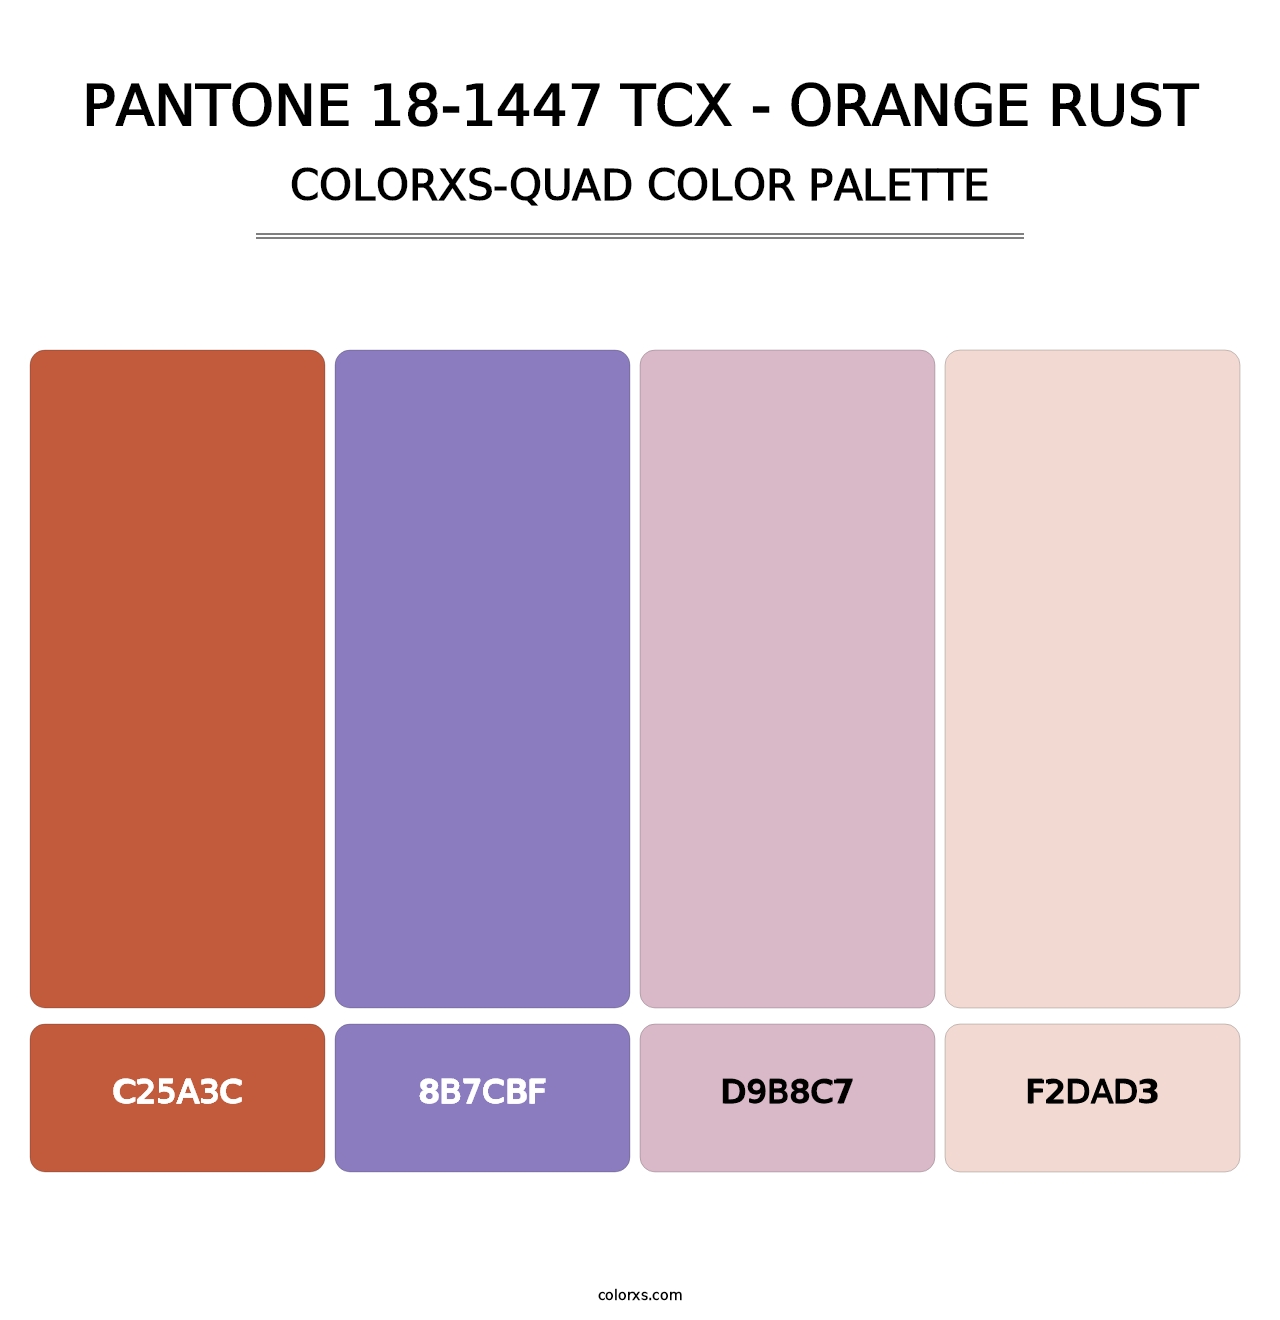 PANTONE 18-1447 TCX - Orange Rust - Colorxs Quad Palette